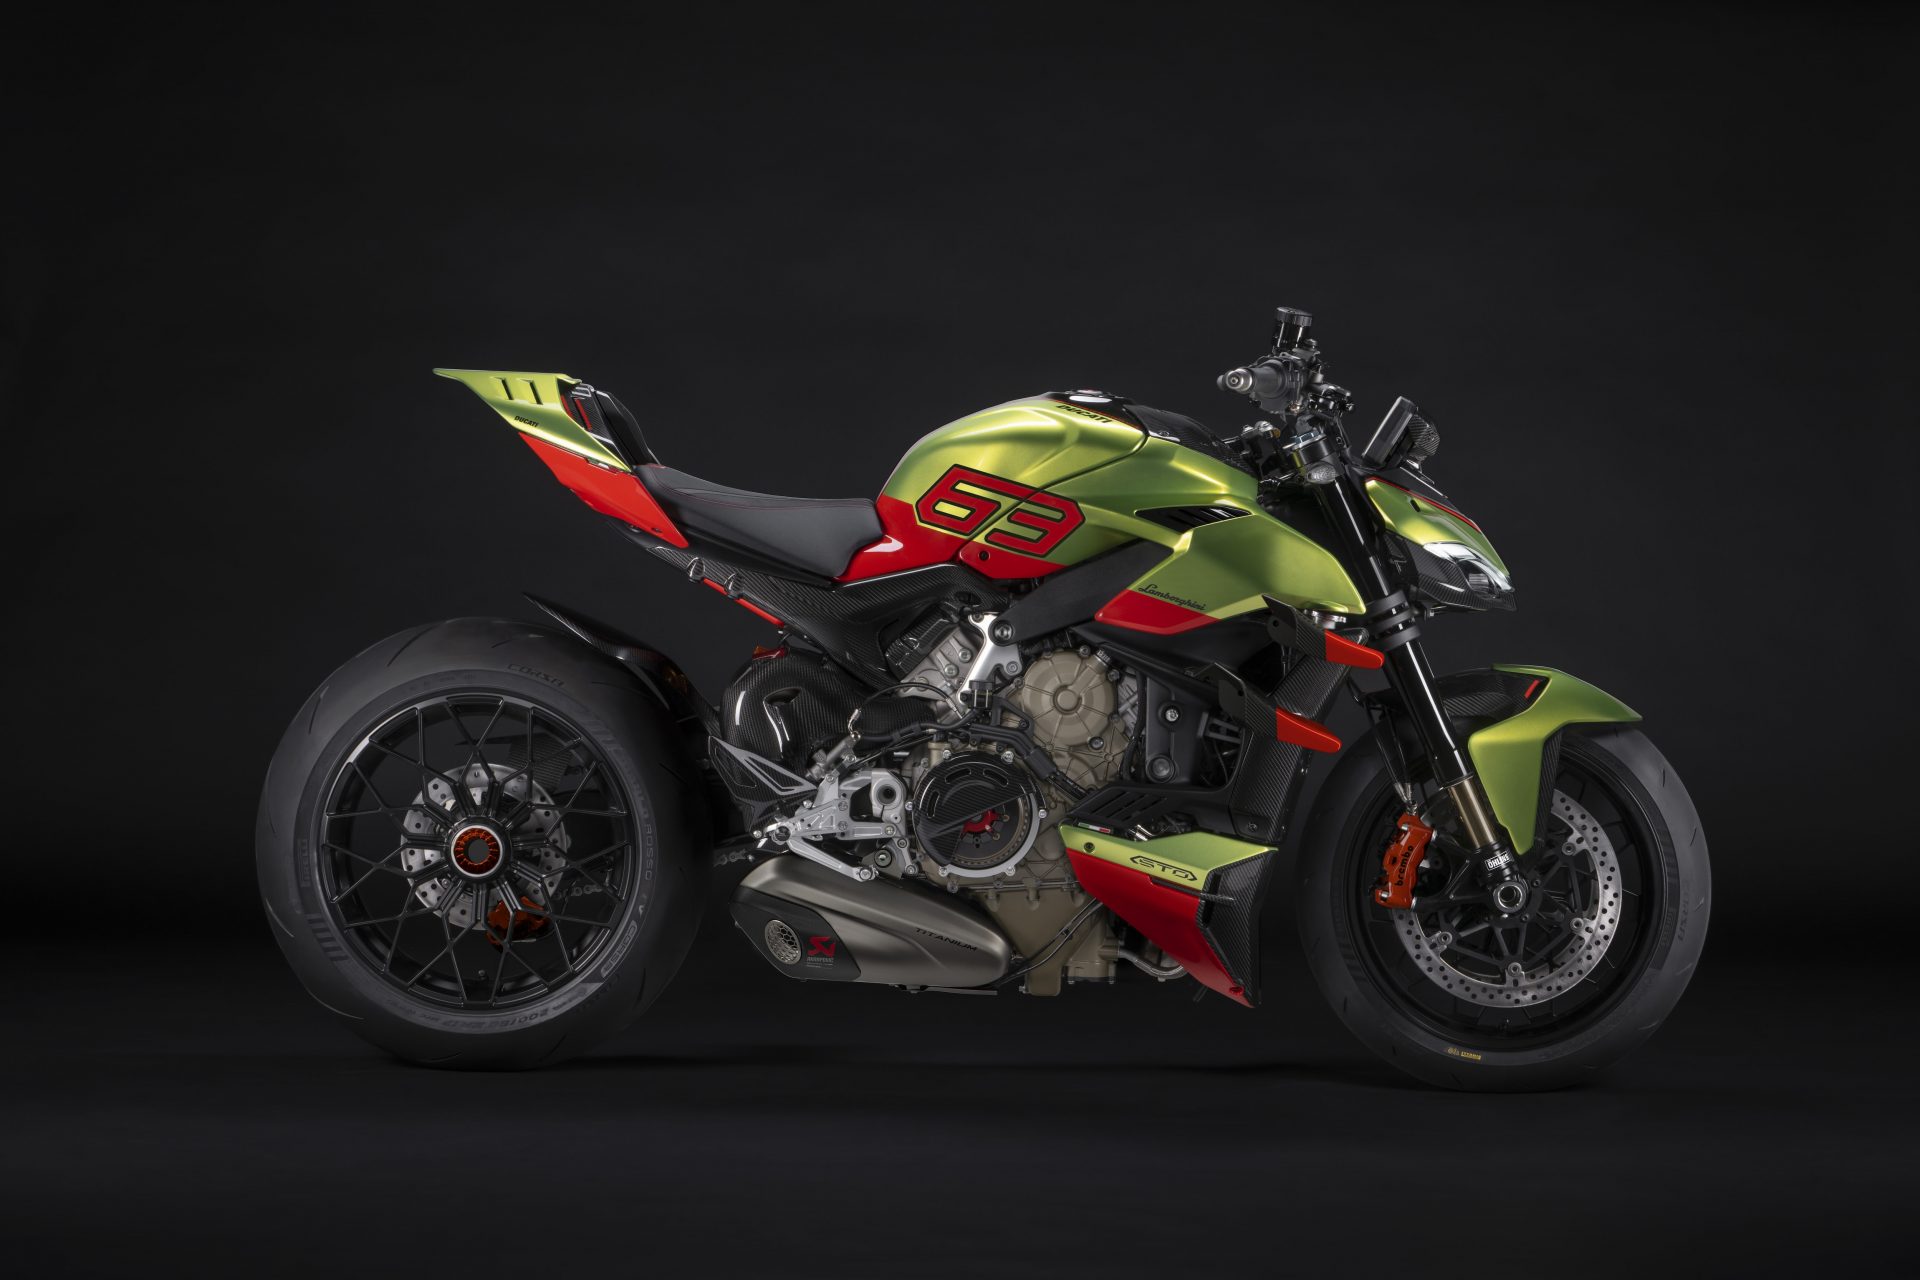 Ducati Panigale V4 Sp Moto Superexclusiva Chega Por R 550 Mil